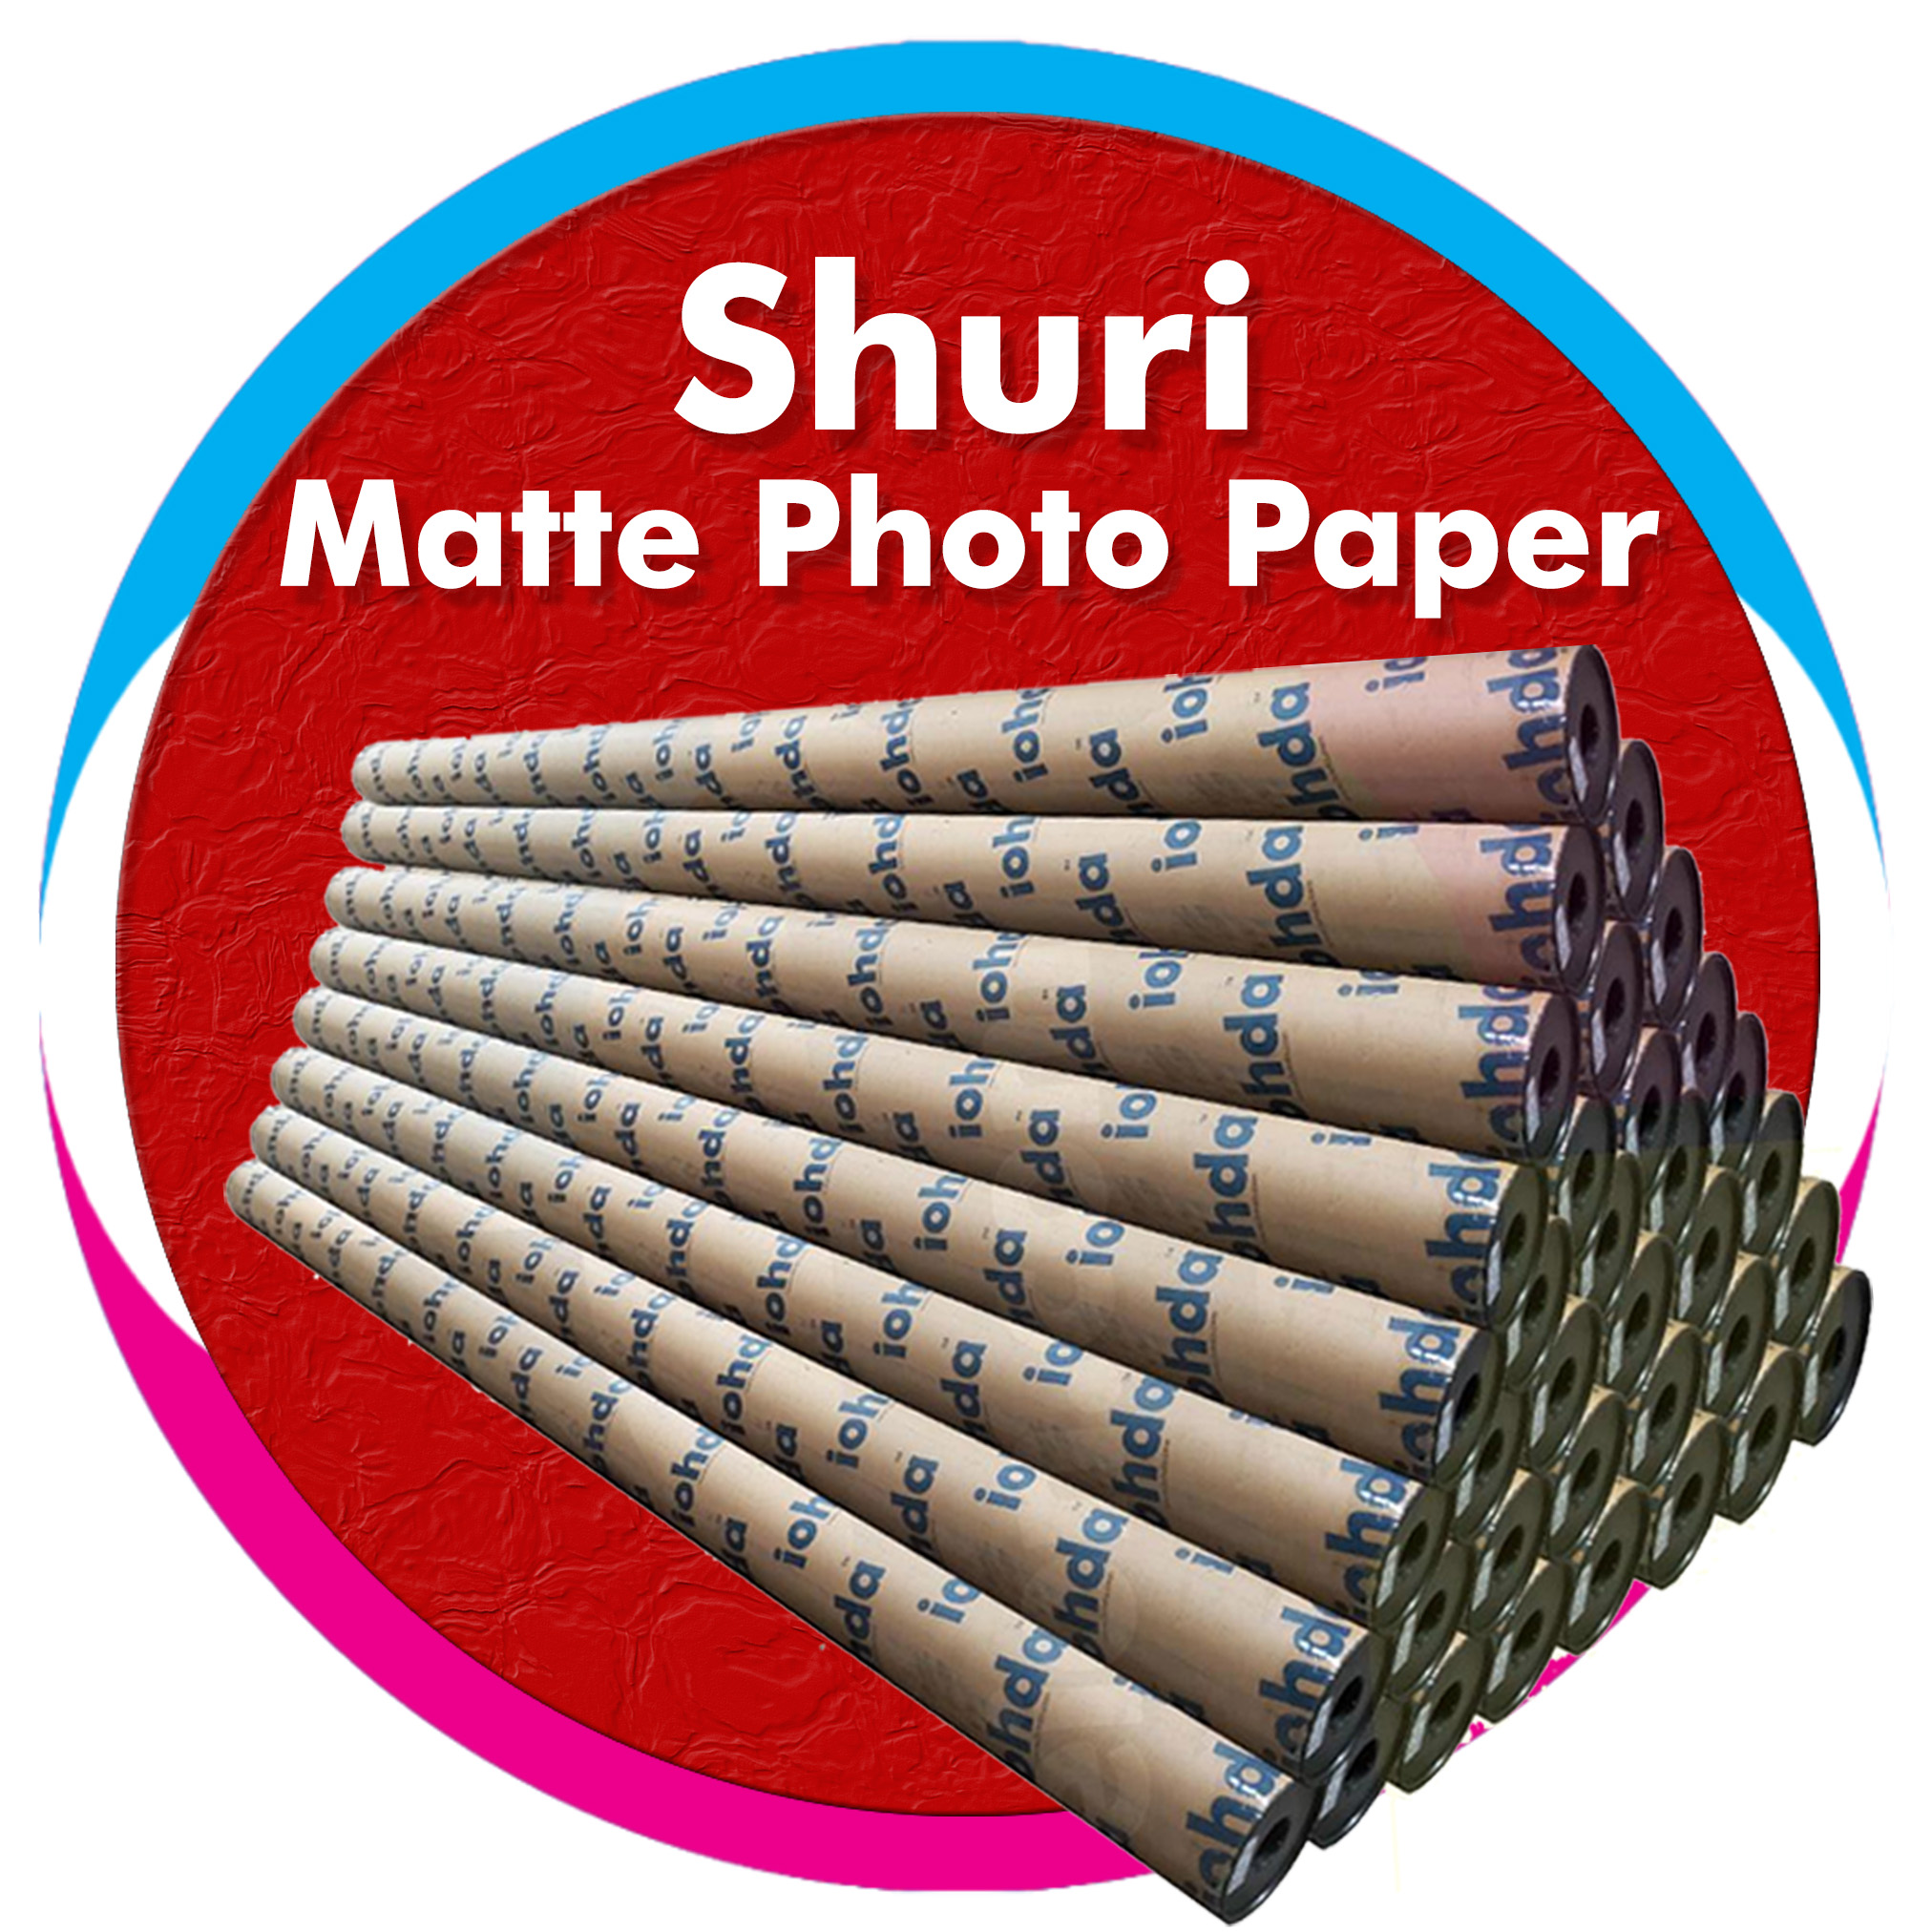 iohda Shuri Matte Photo Paper Banner 54 in x 150 ft